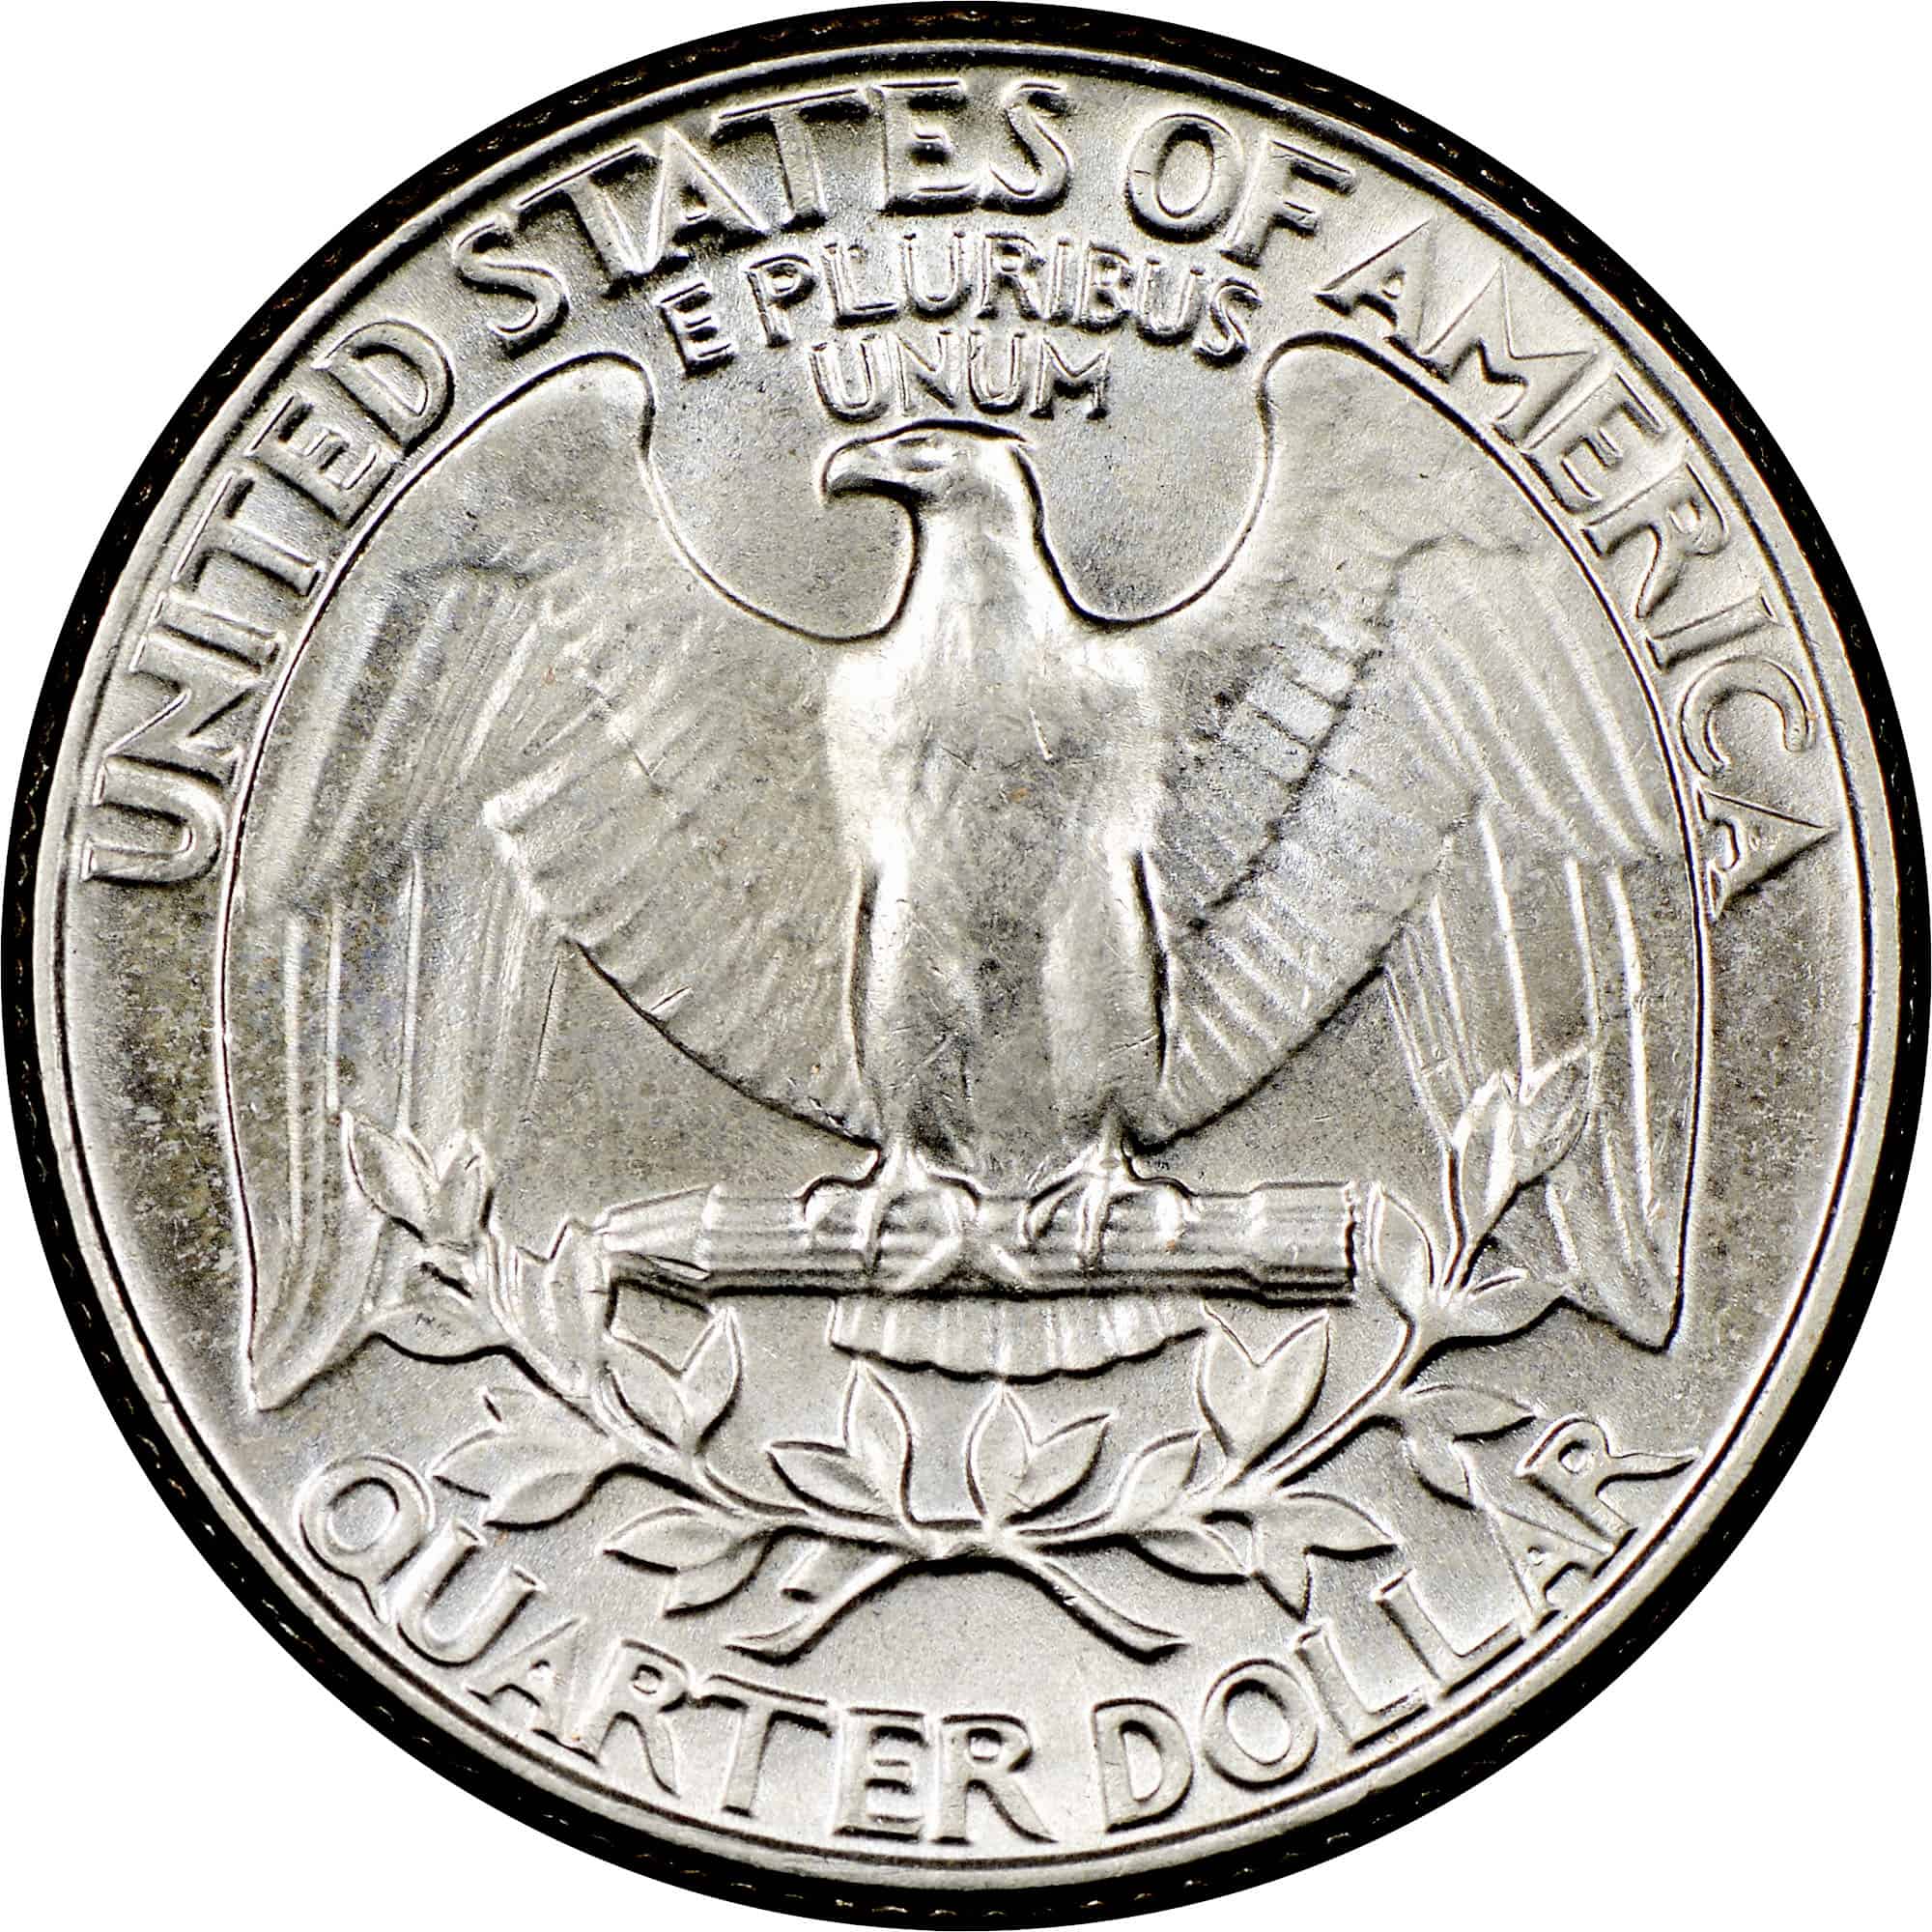 The Reverse of the 1983 Quarter